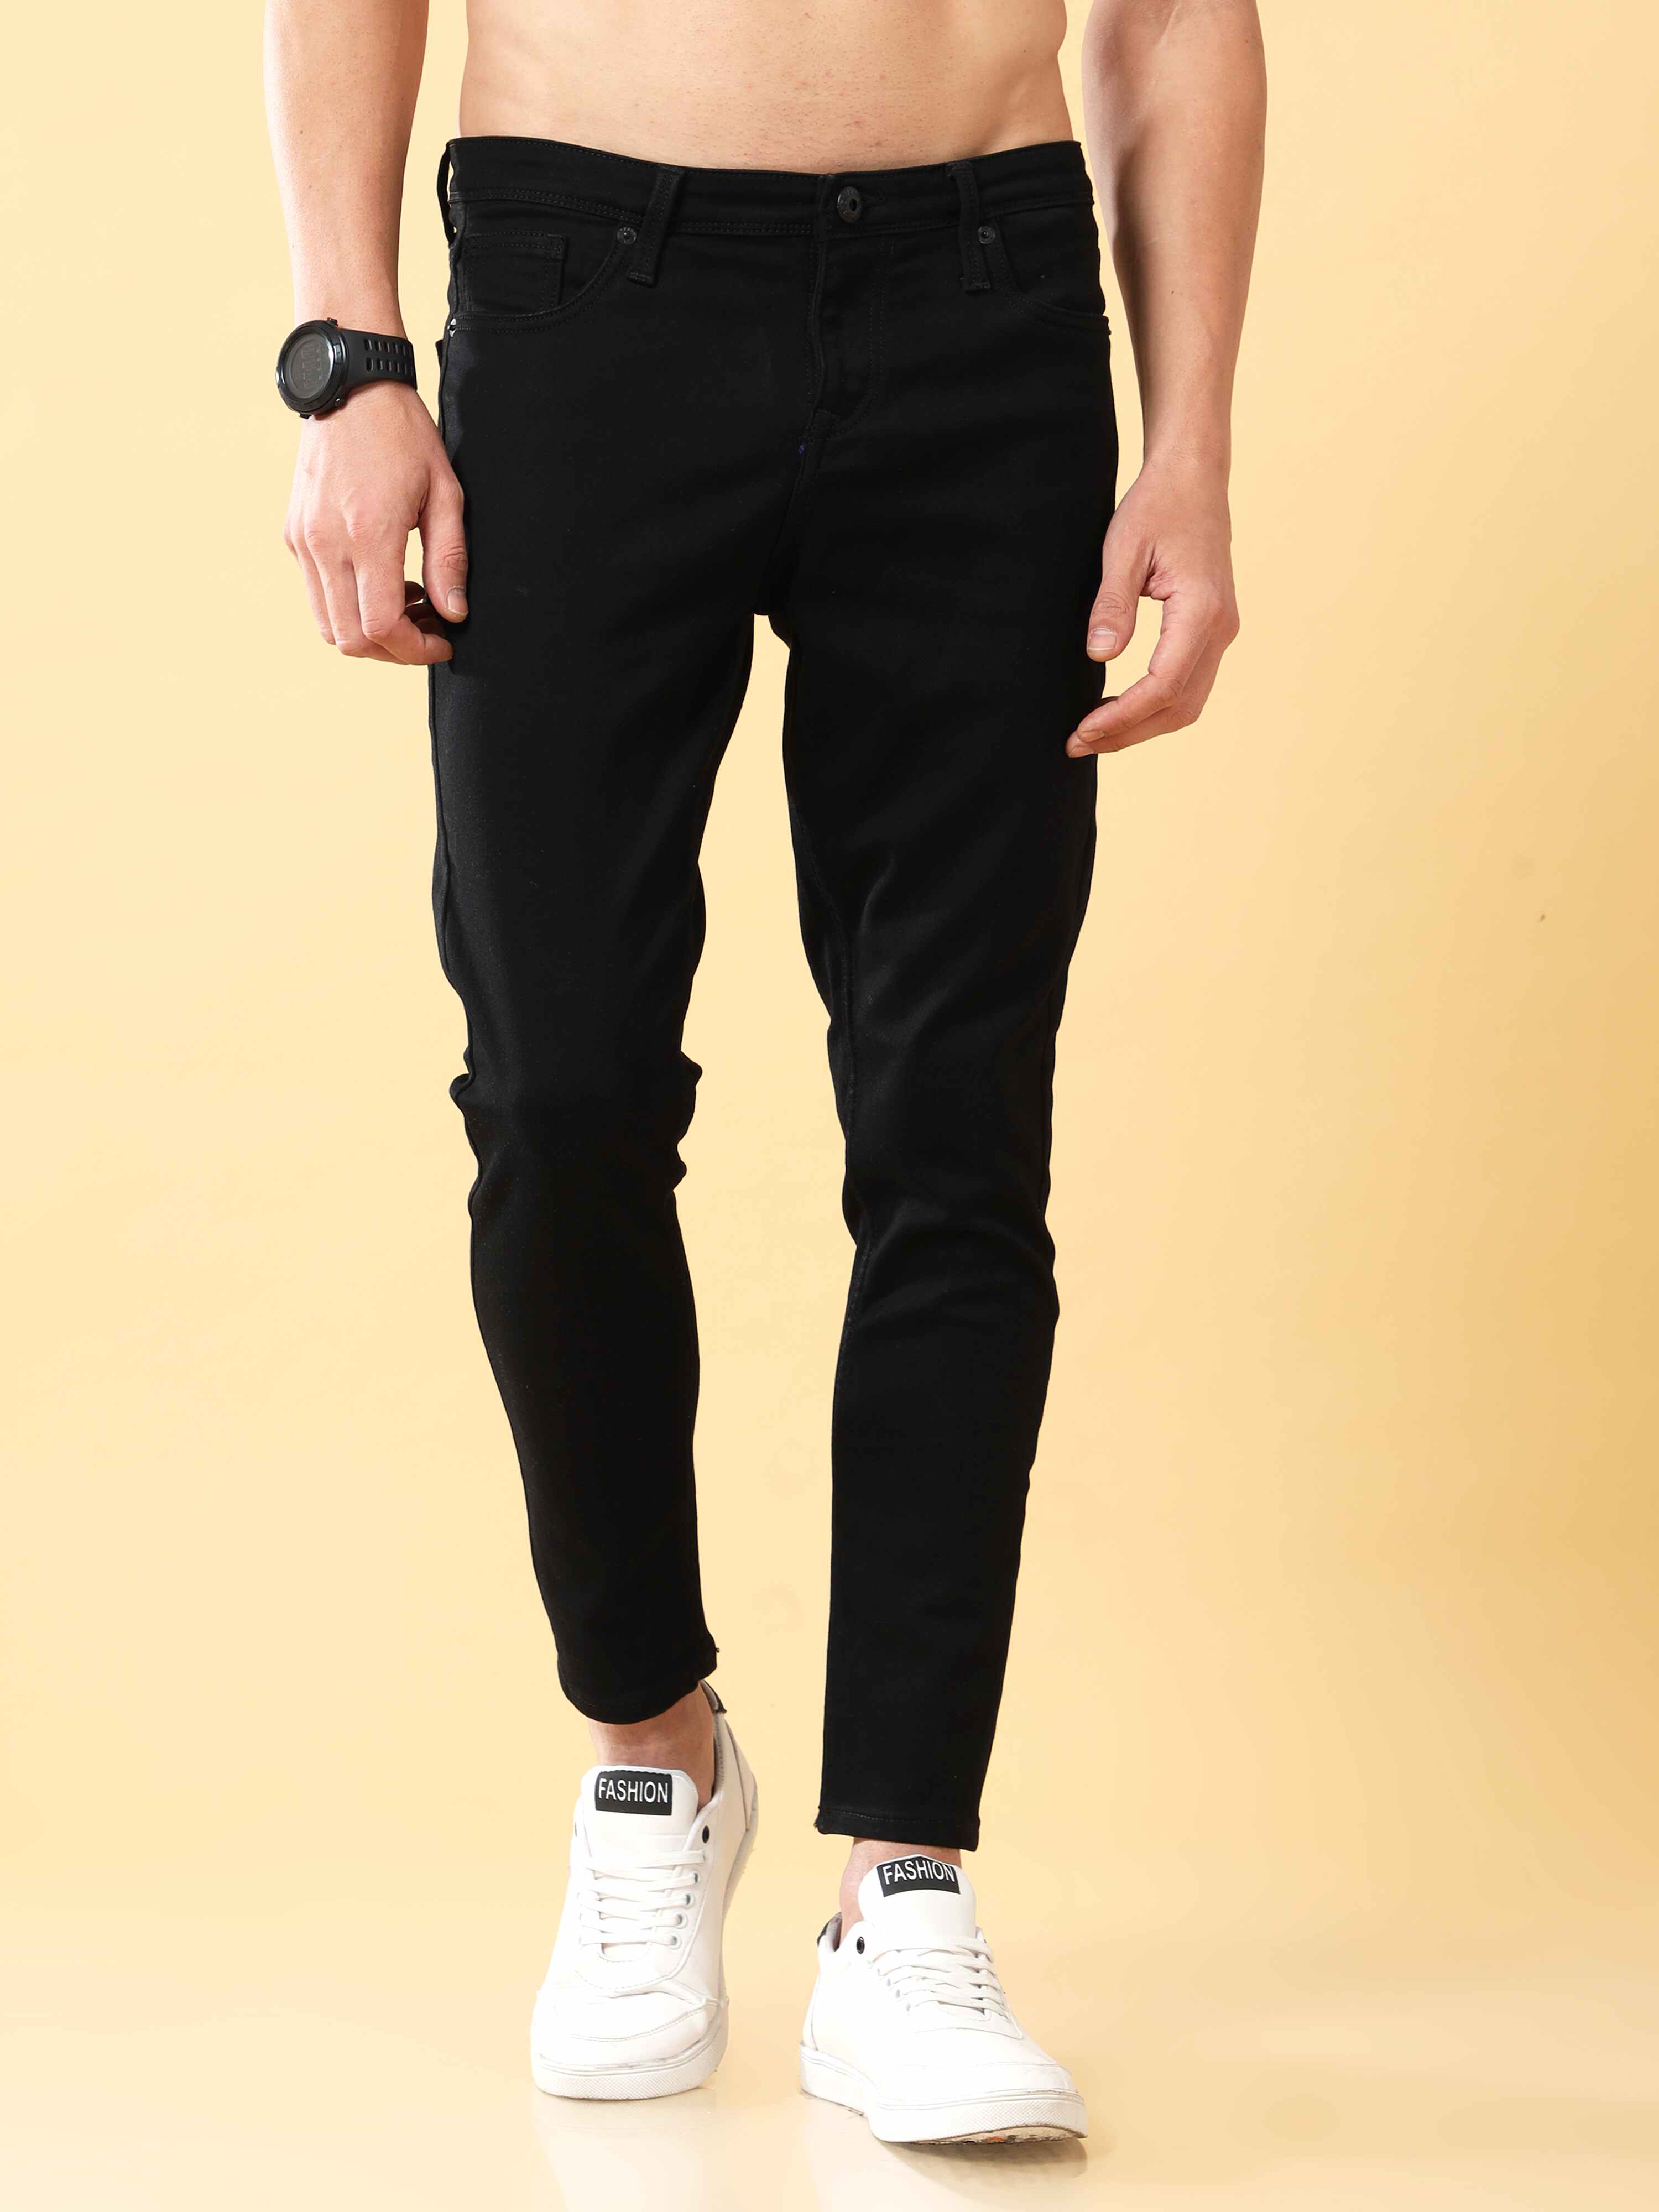 Shop Classic Jet Black Jeans Online From Badmaash – Badmaash